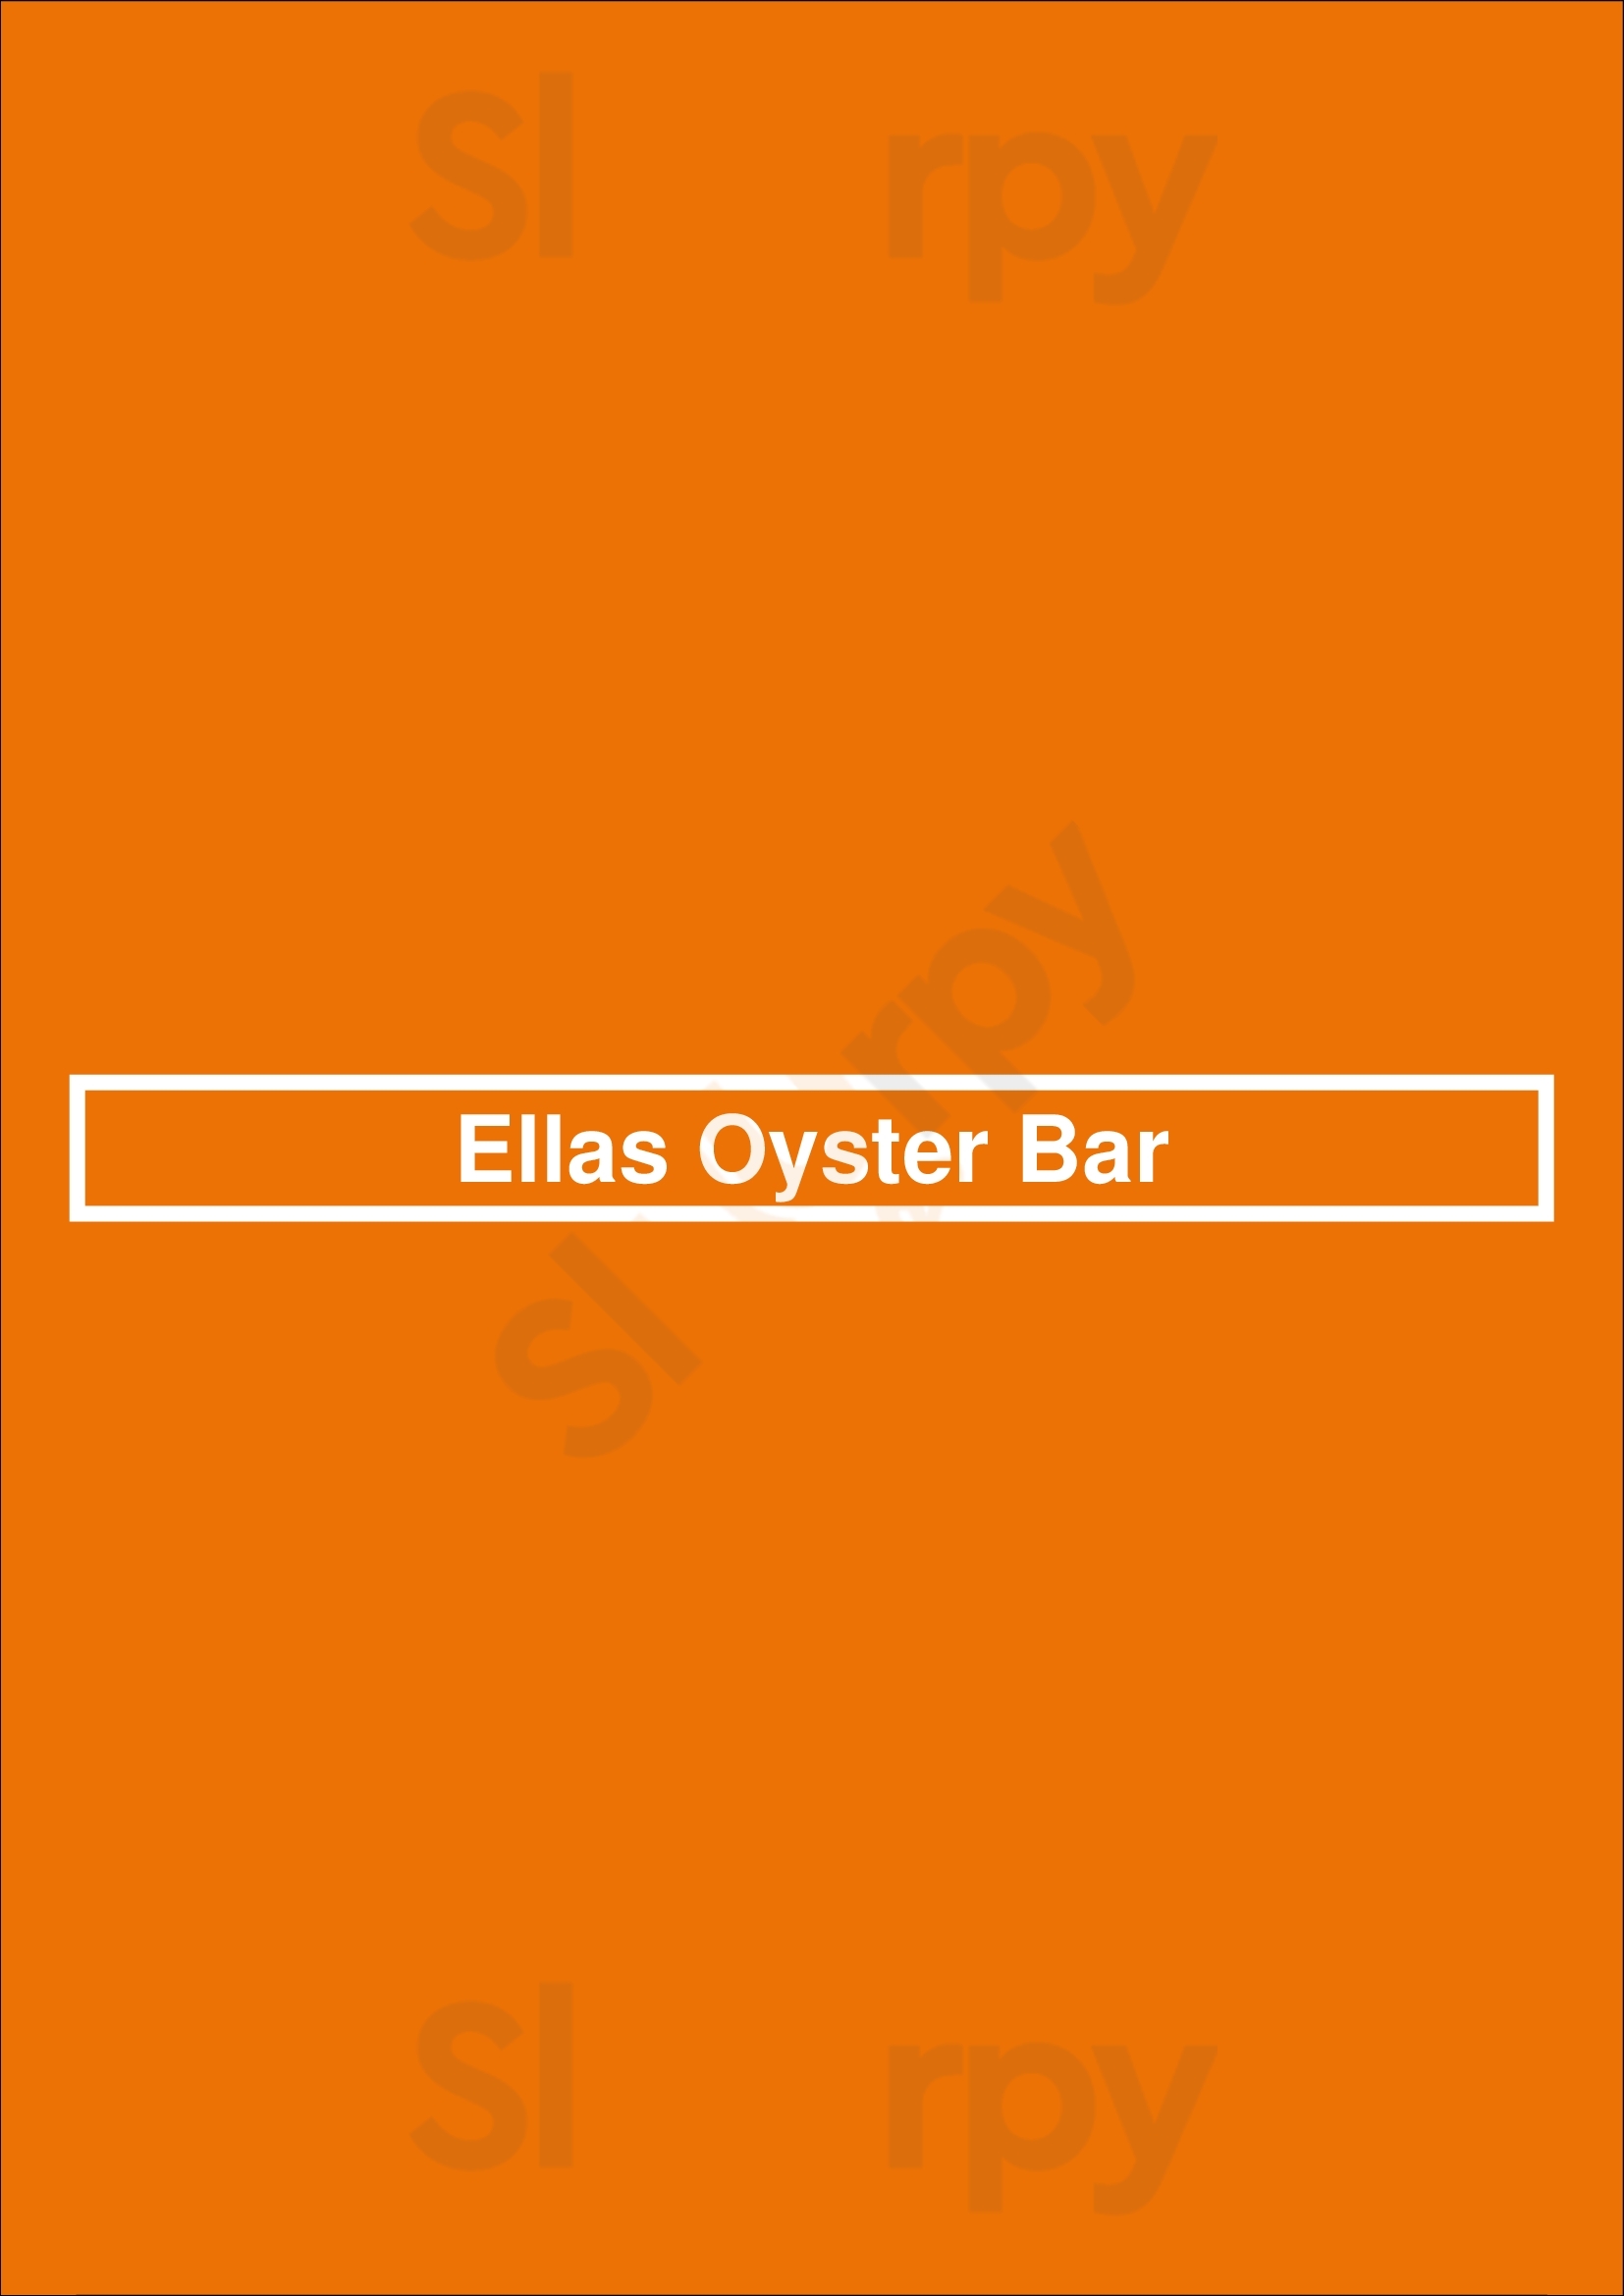 Ella's Oyster Bar Miami Menu - 1